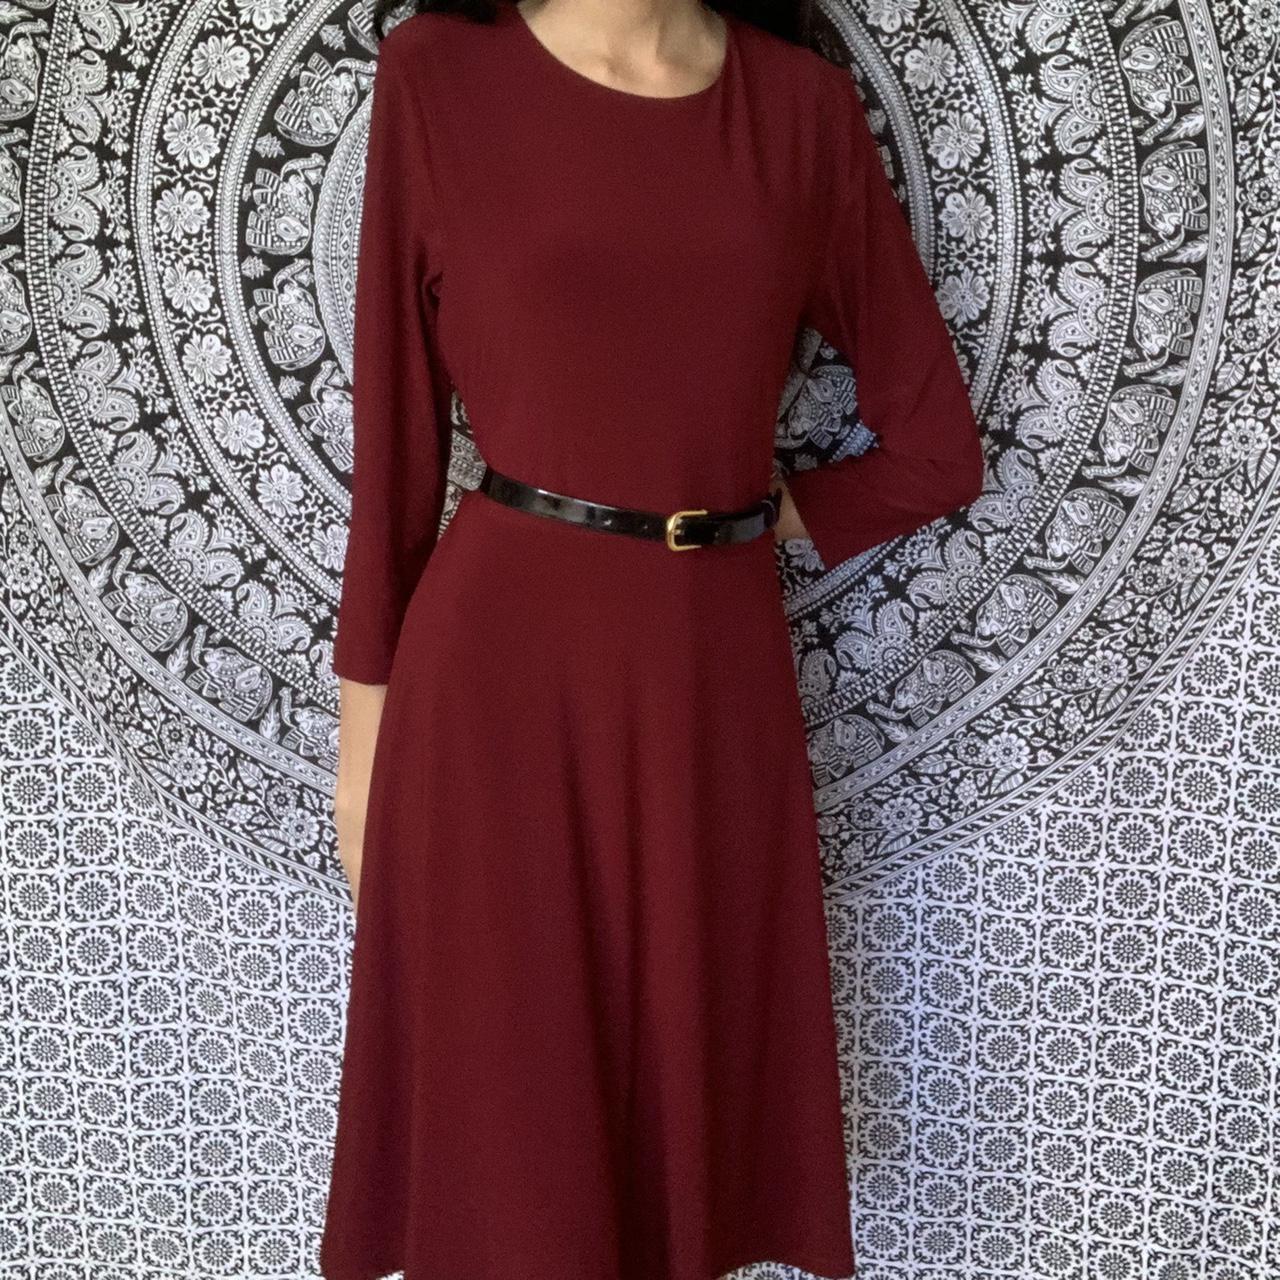 Ralph Lauren Women's Burgundy and Red Dress